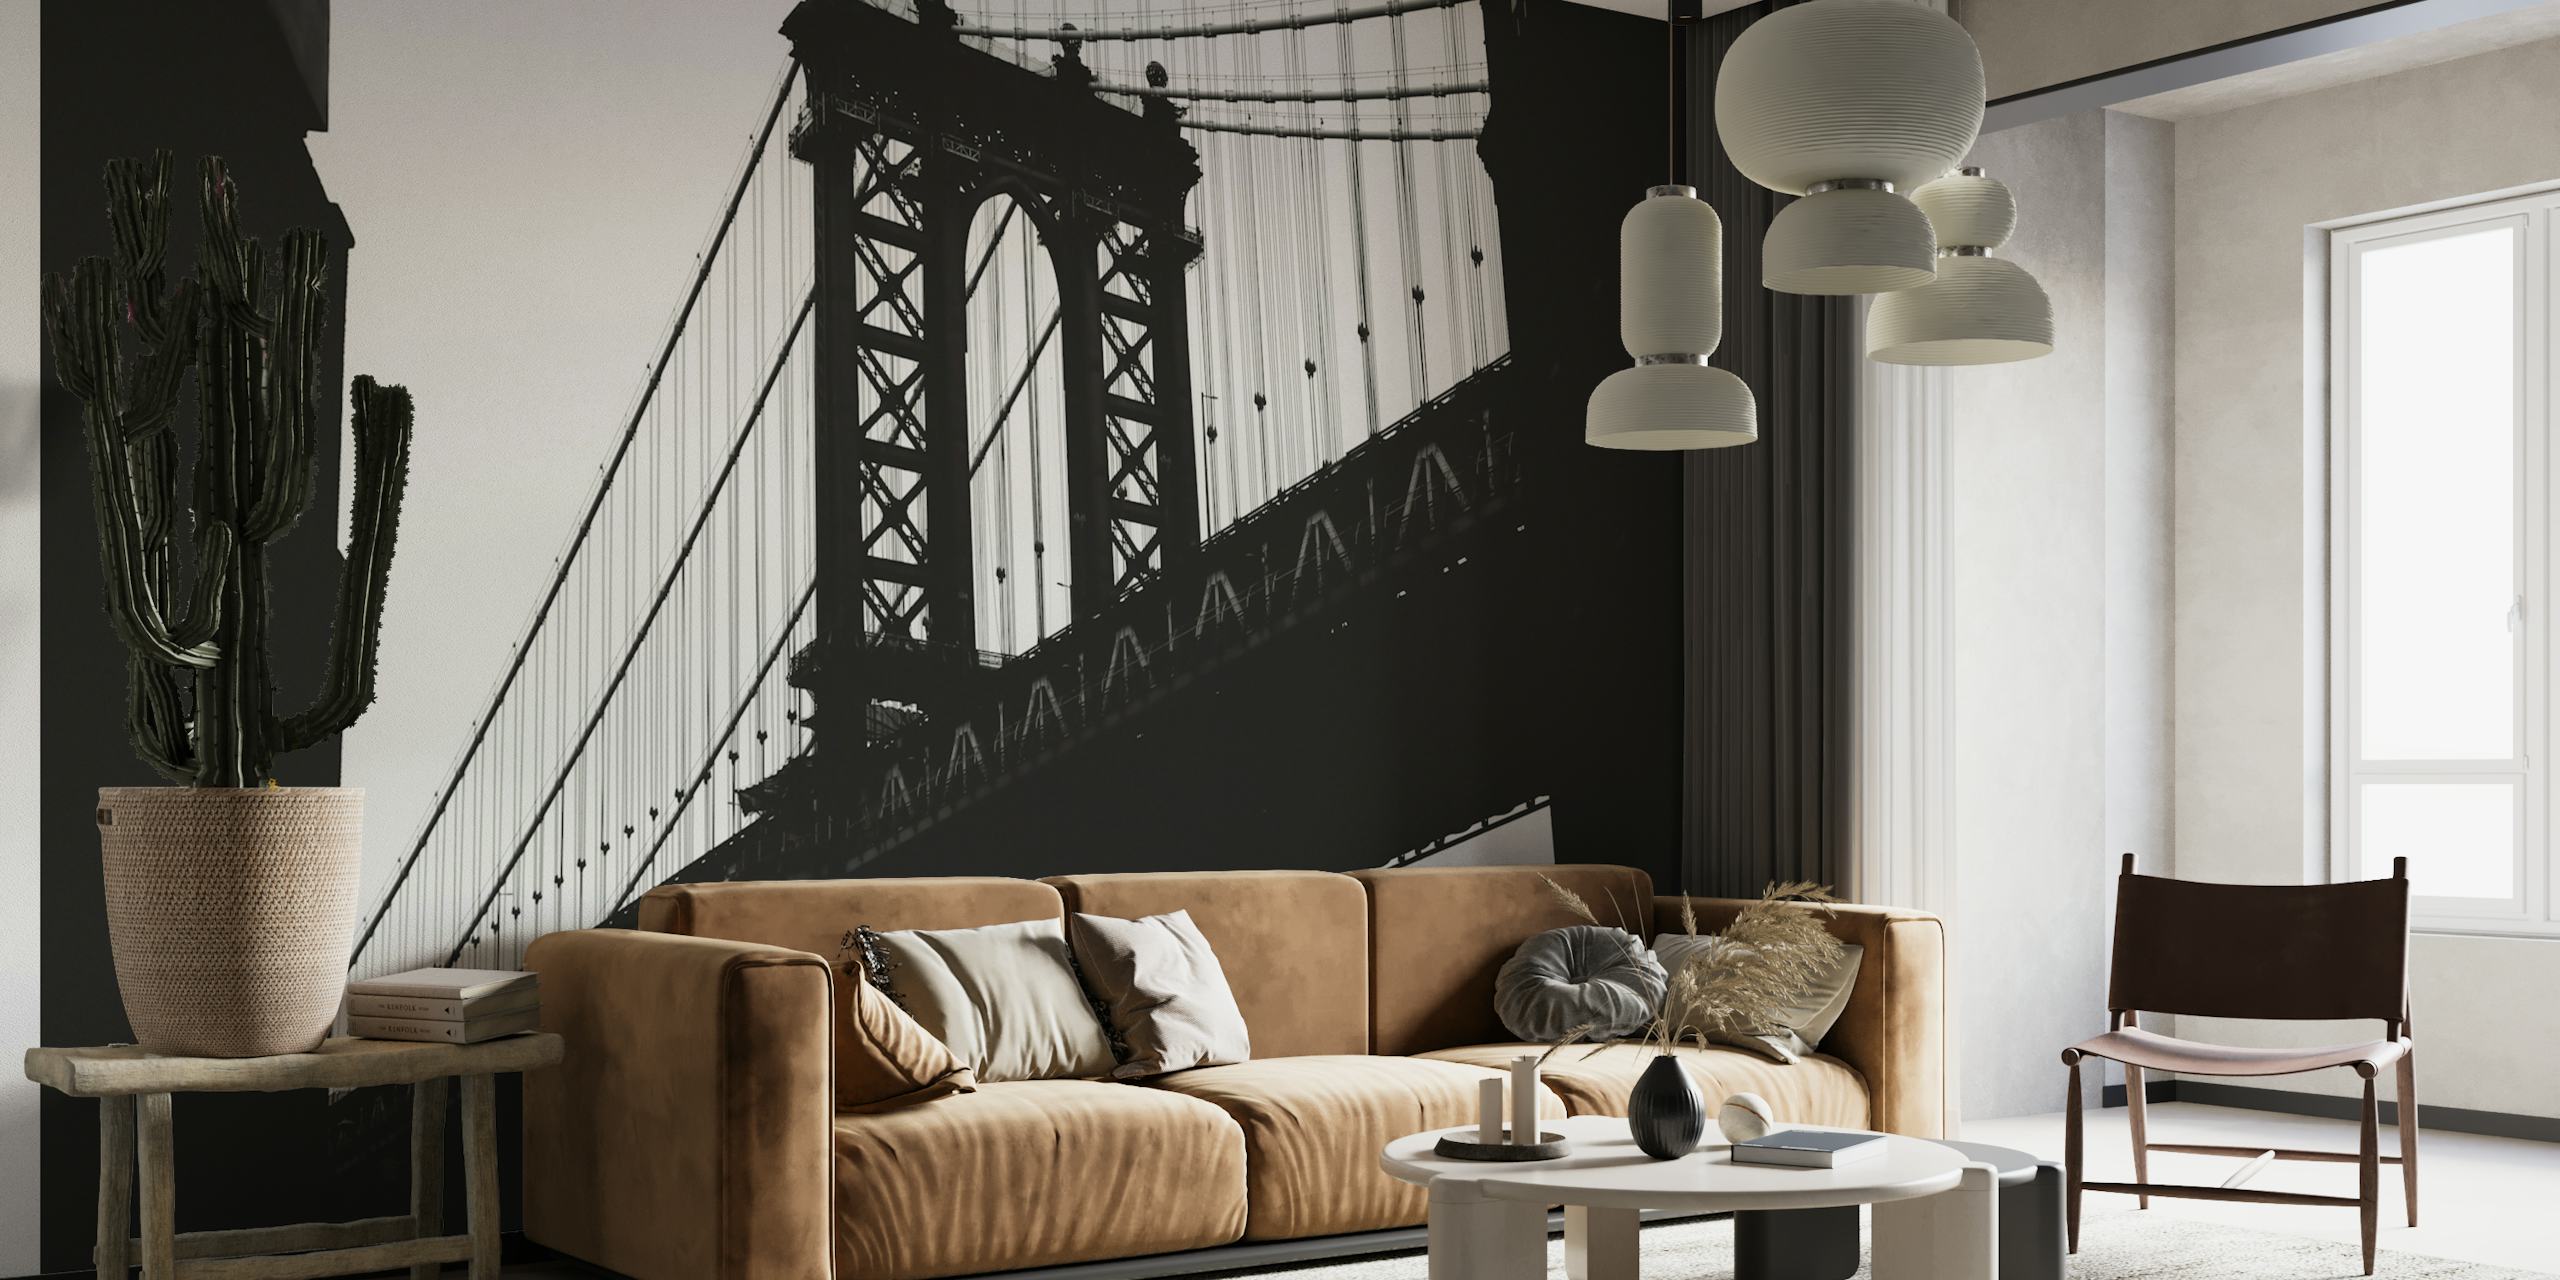 Manhattan Bridge wallpaper